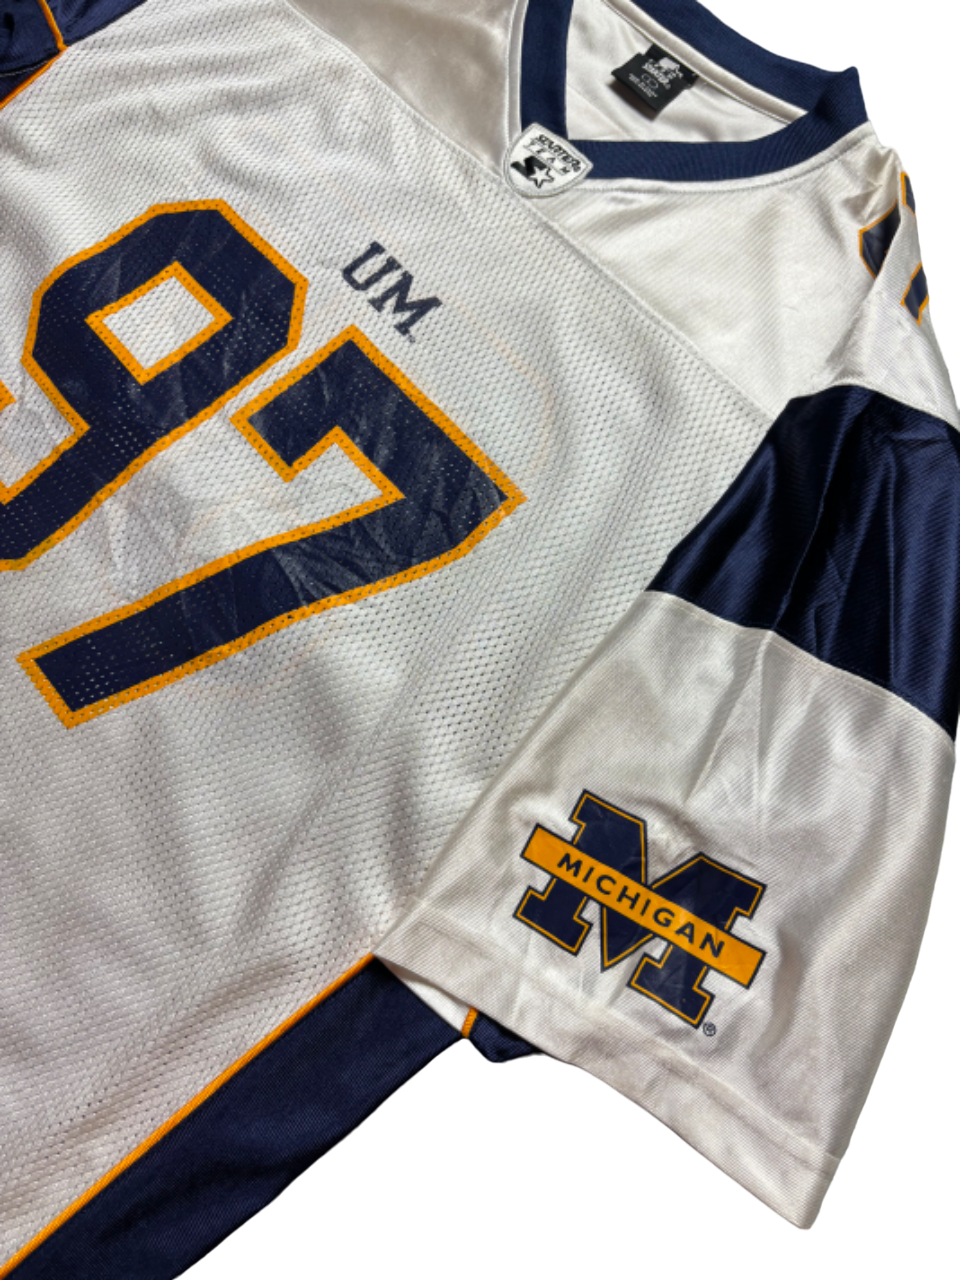 Camiseta Starter X NFL Michigan Wolverines 97 retro USA - Large